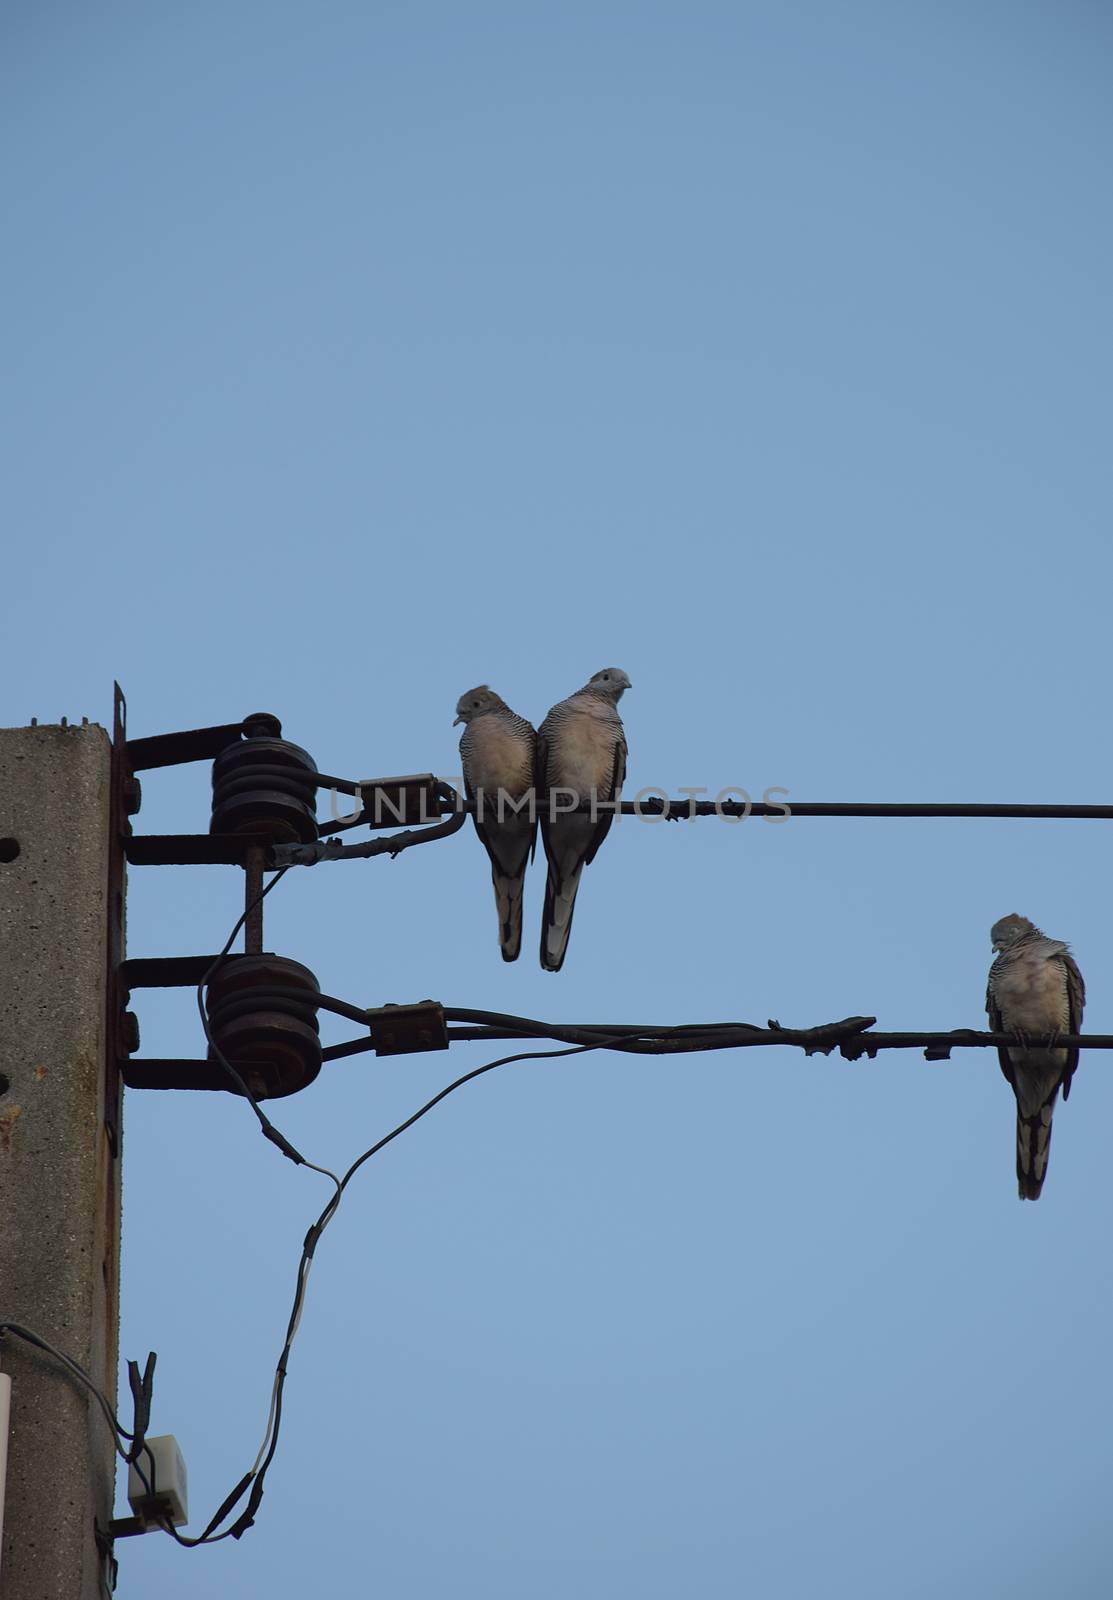 Three Dove bird on power line against clear sky background.